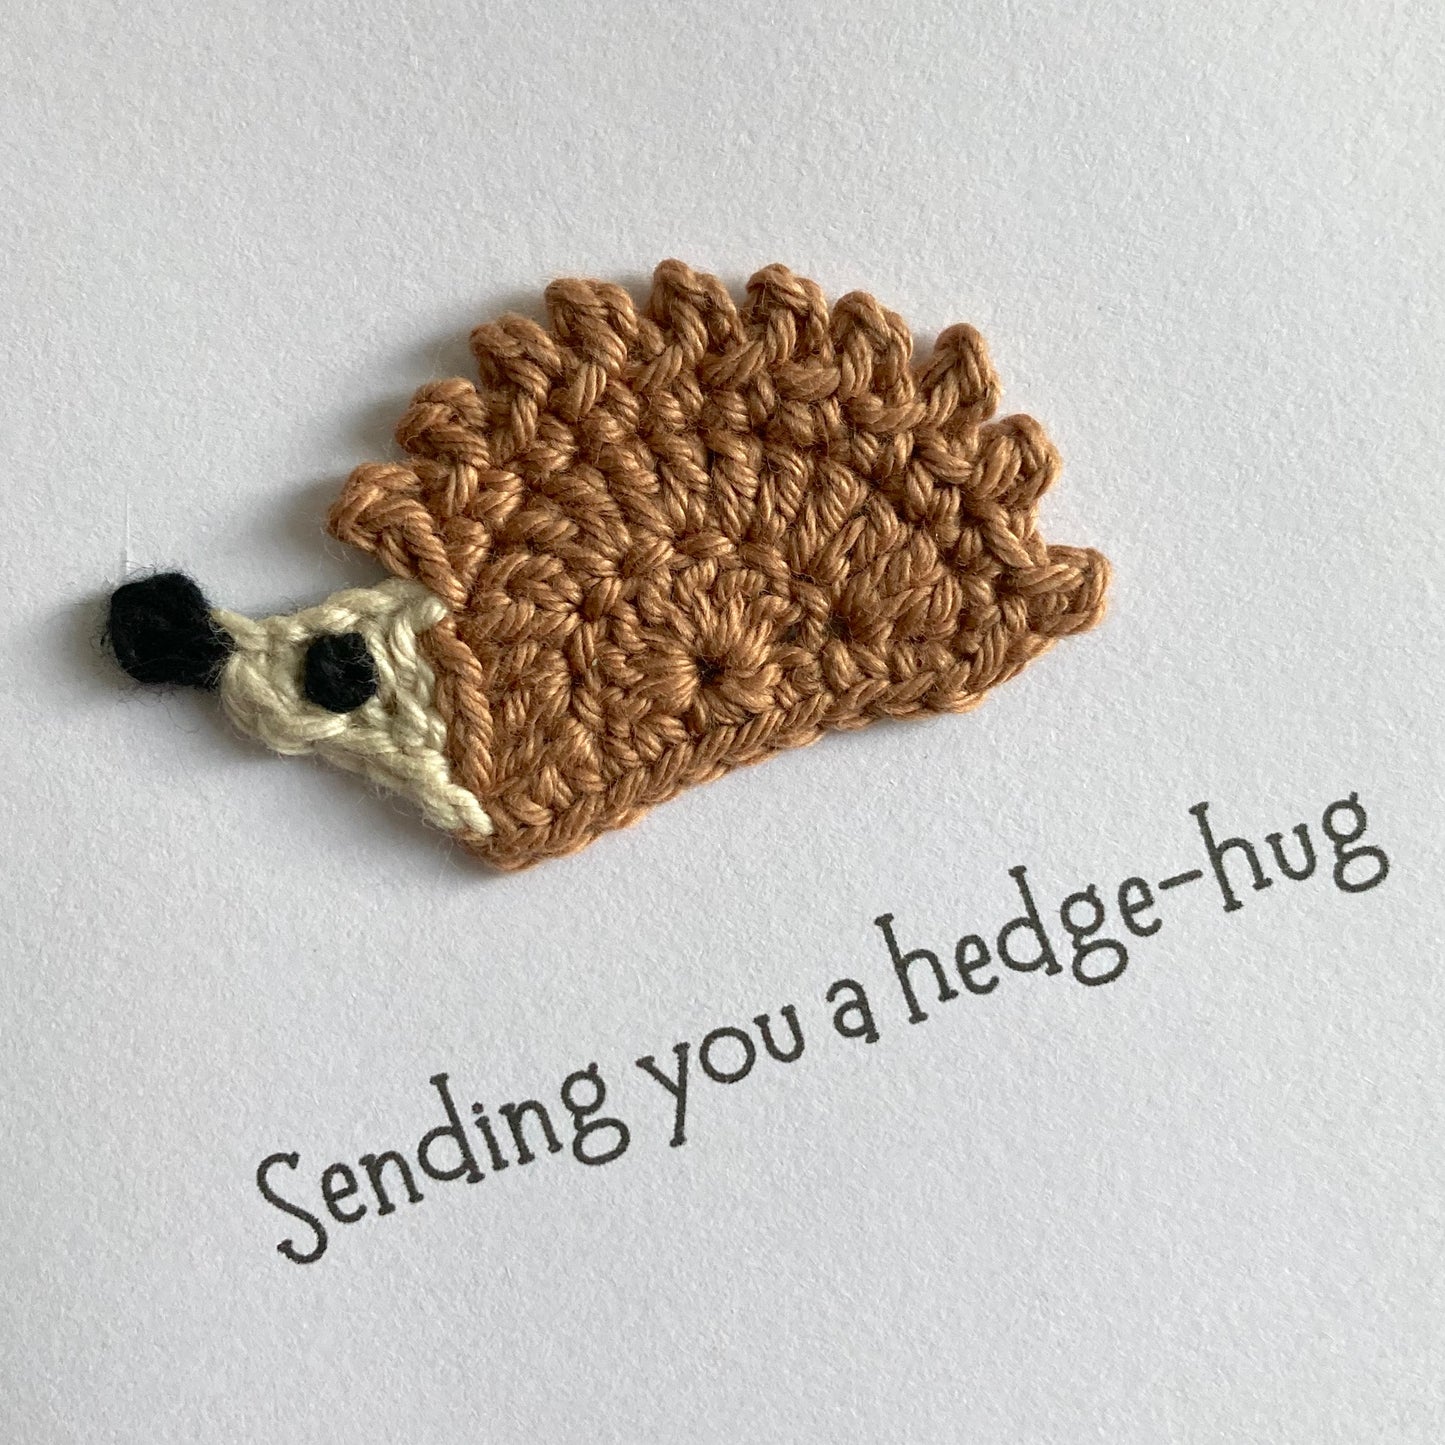 Hedgehog Crochet Card - Handmade Pun Card